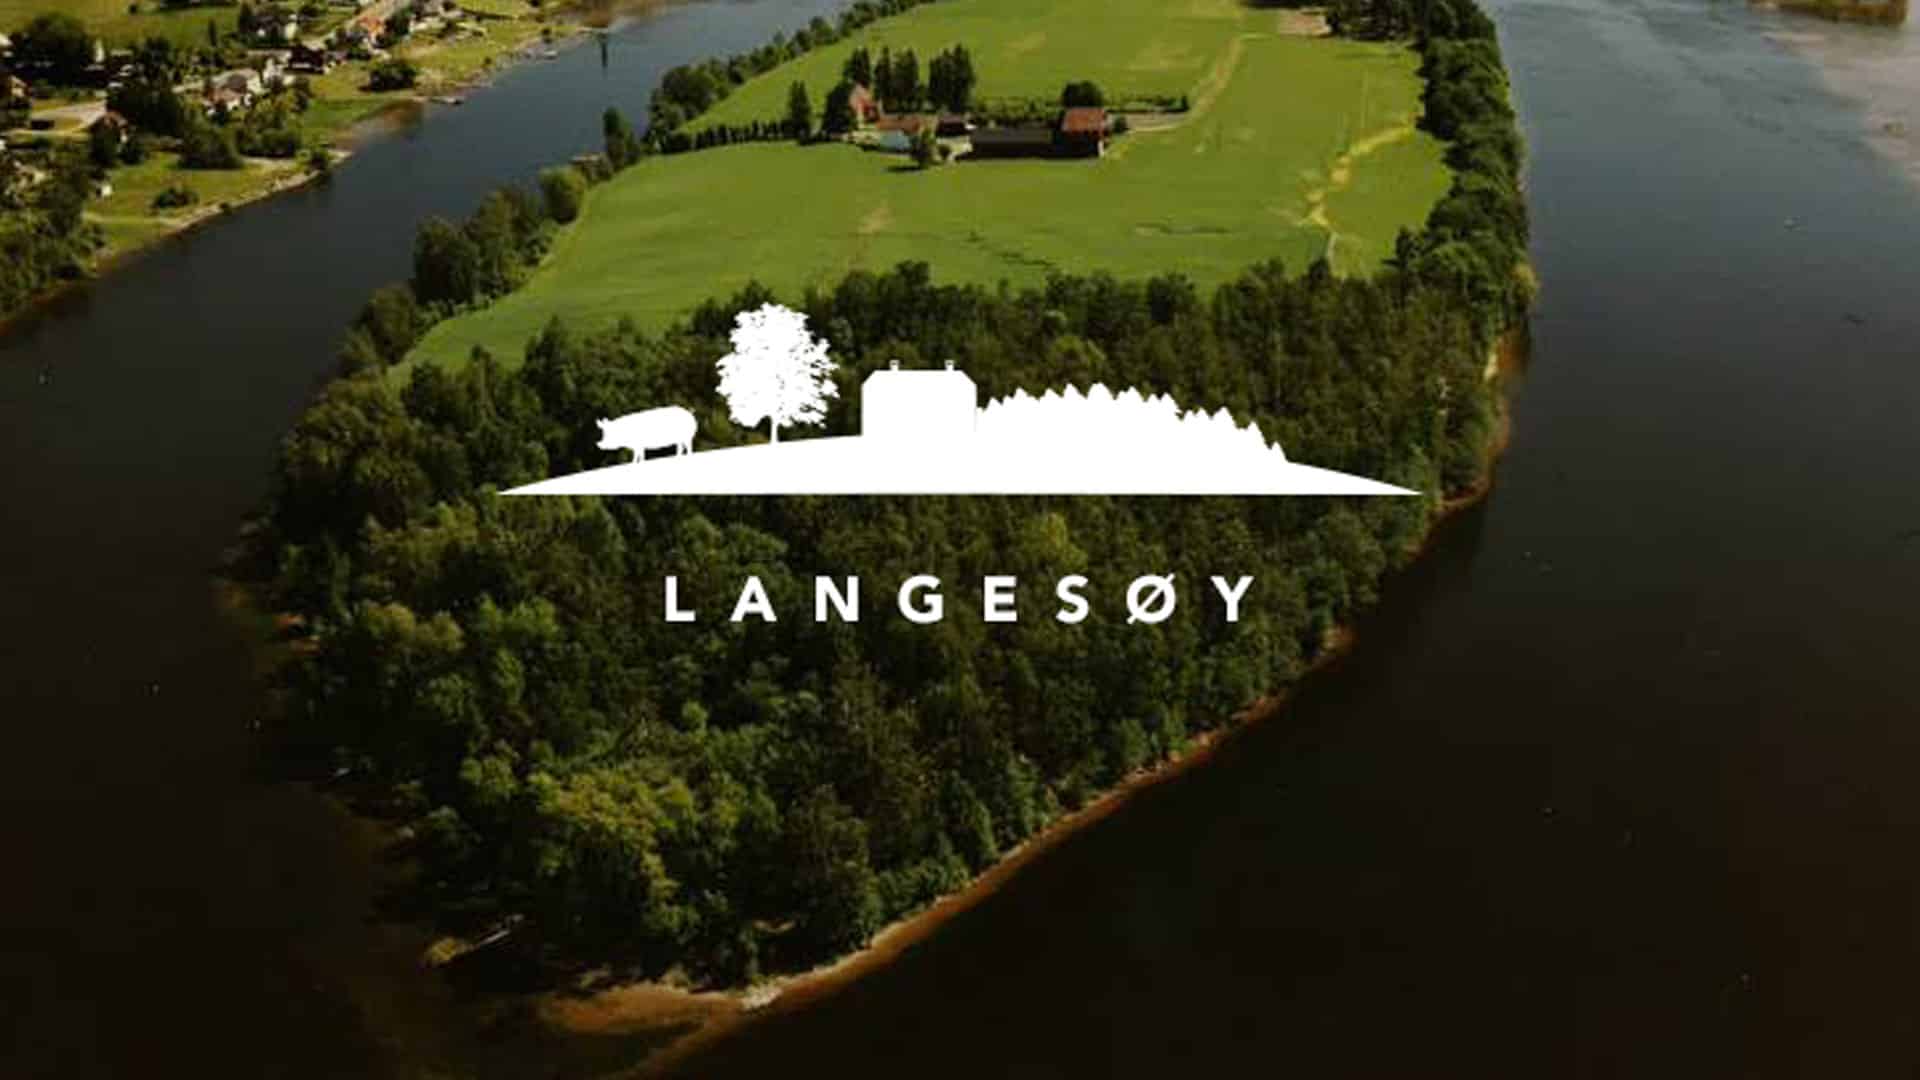 Langesøy